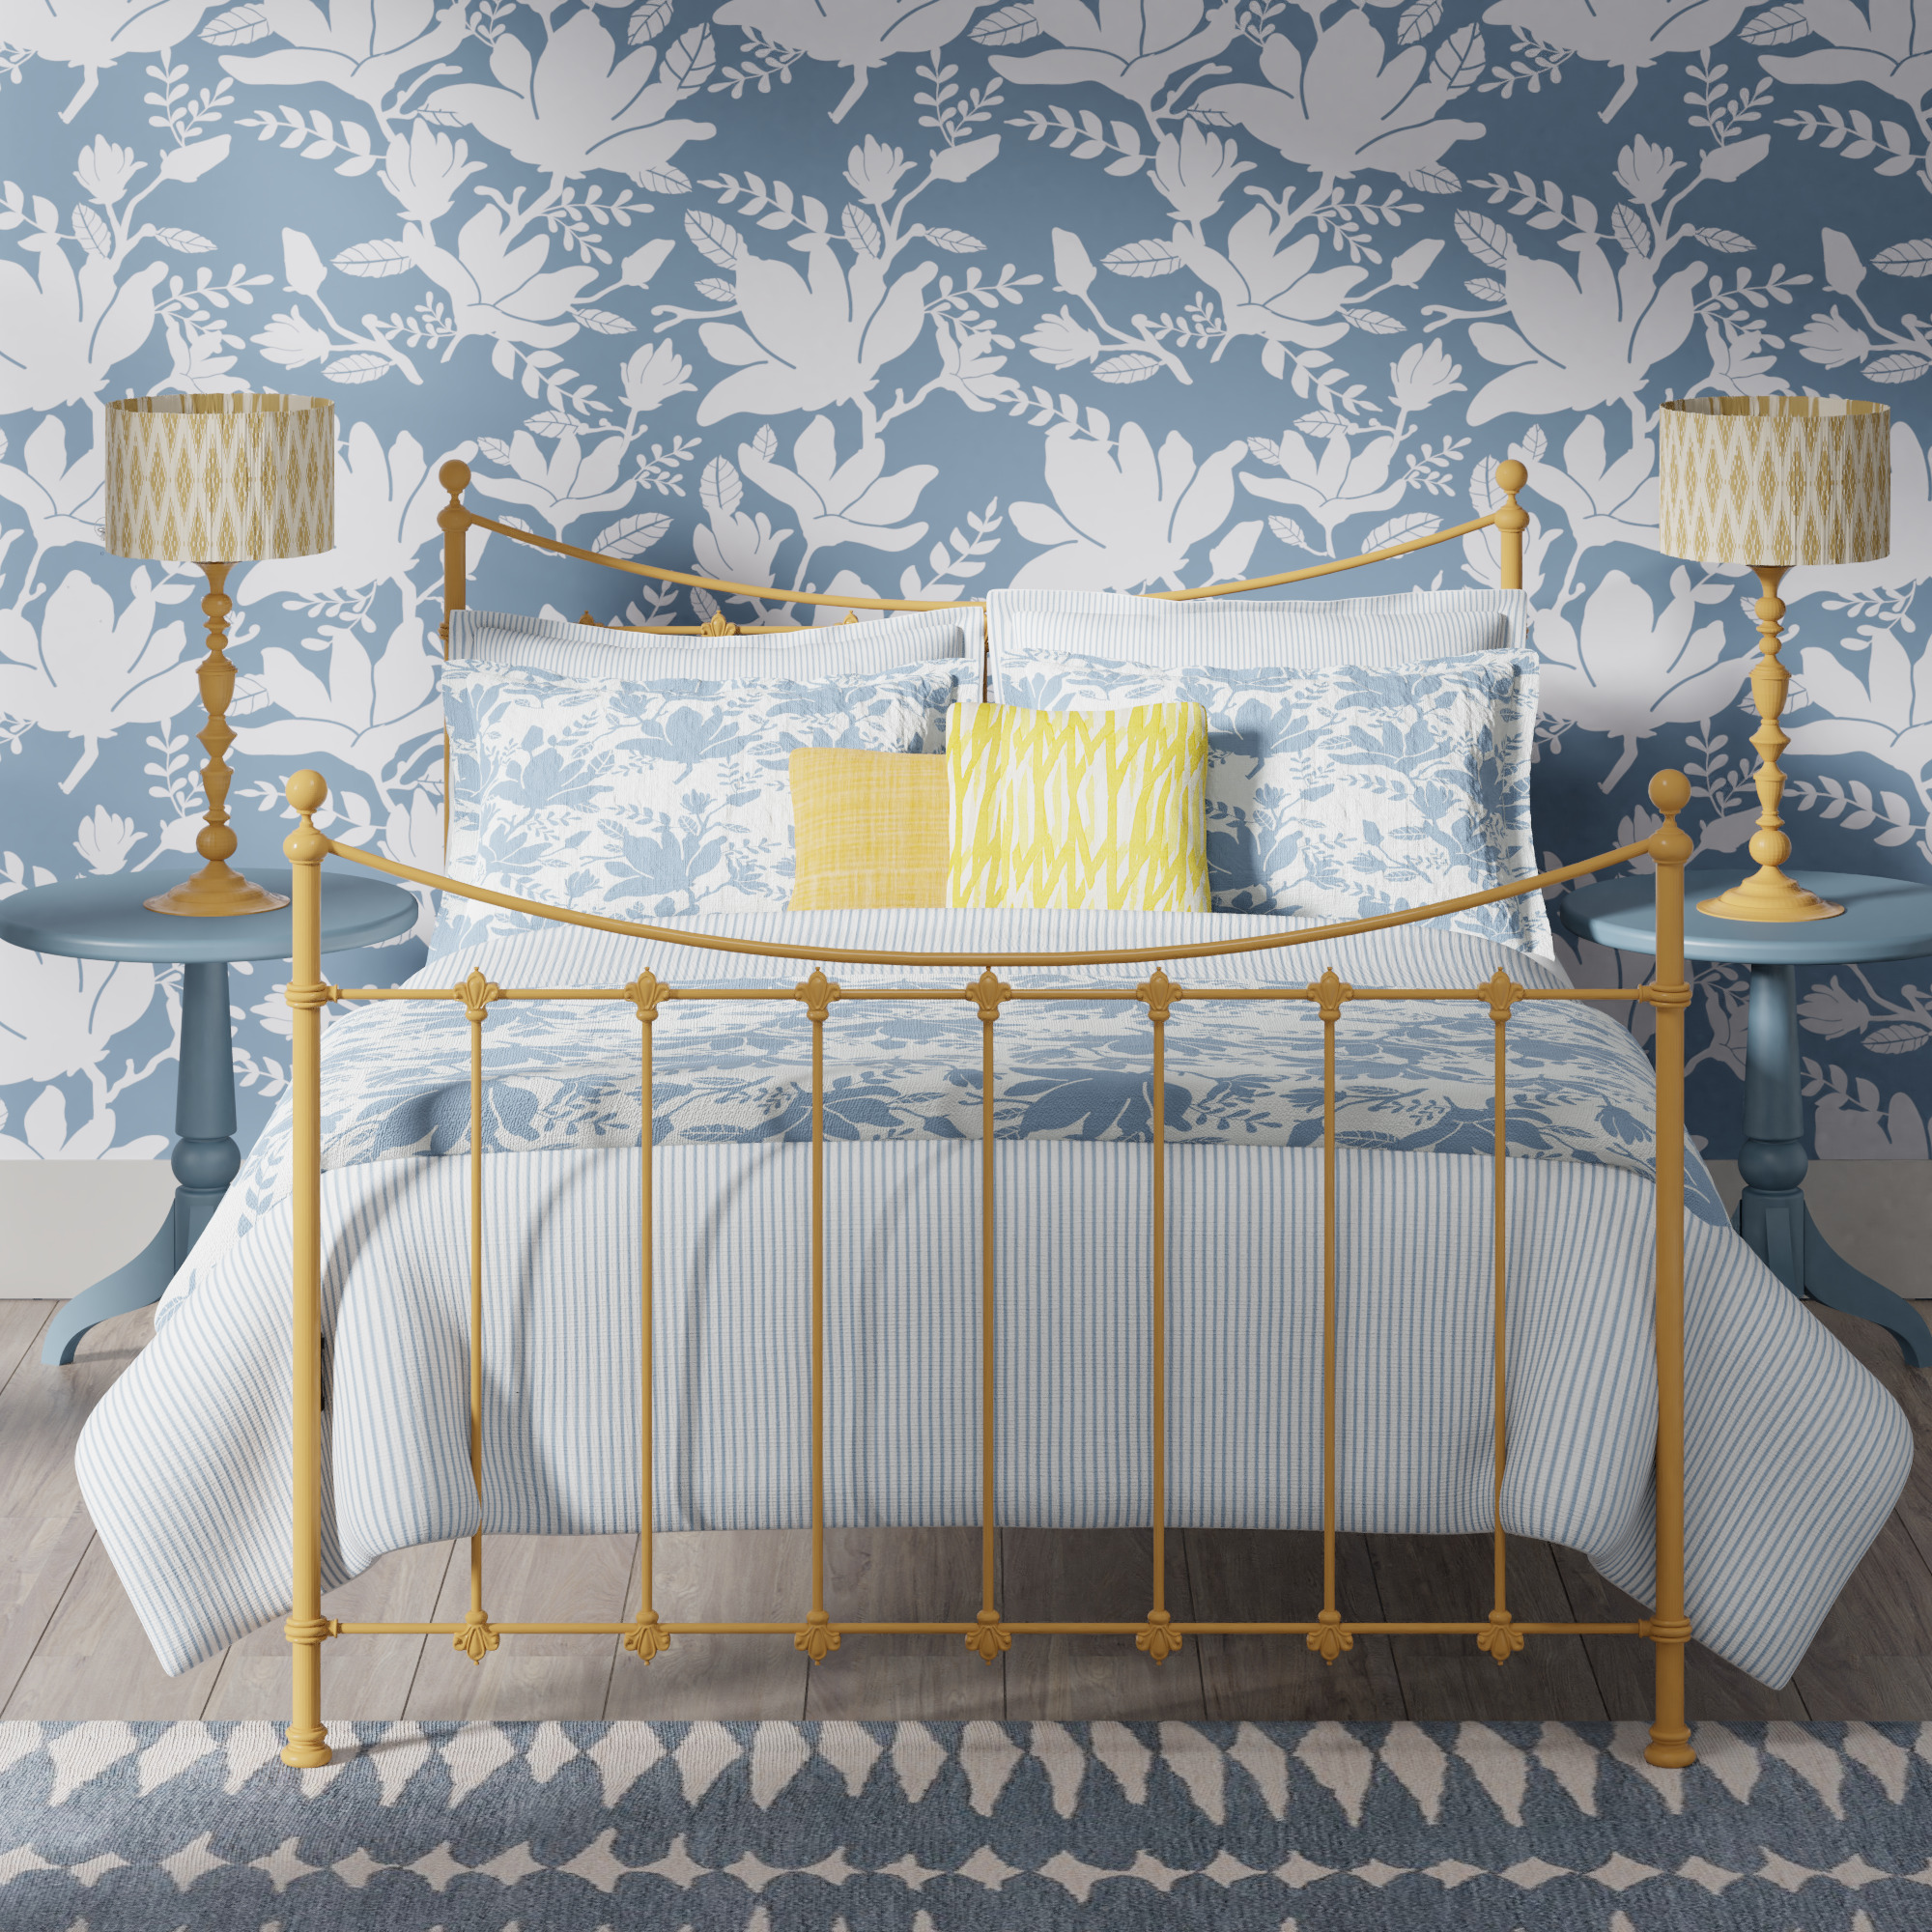 Chatsworth iron bed - Blue and orange bedroom